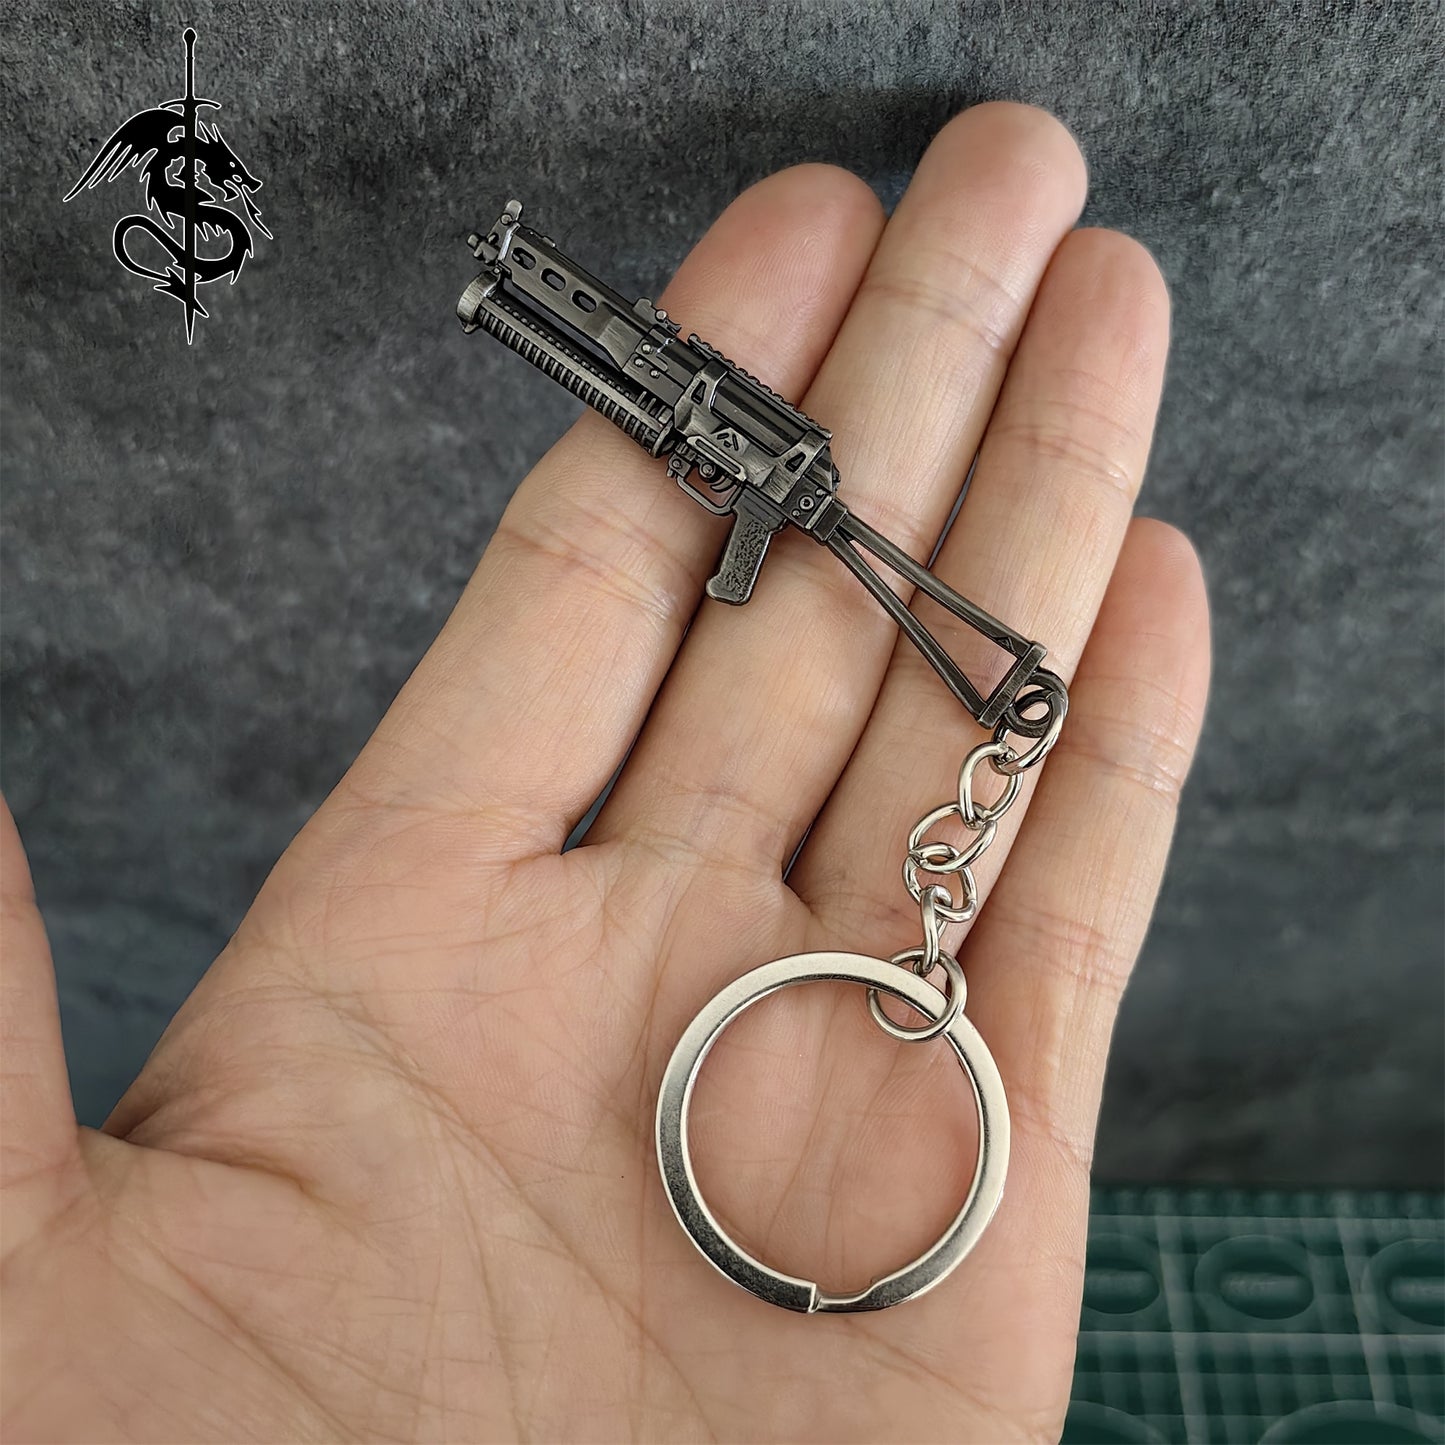 Tiny PP19 Bison SMG Metal Gun Keychain